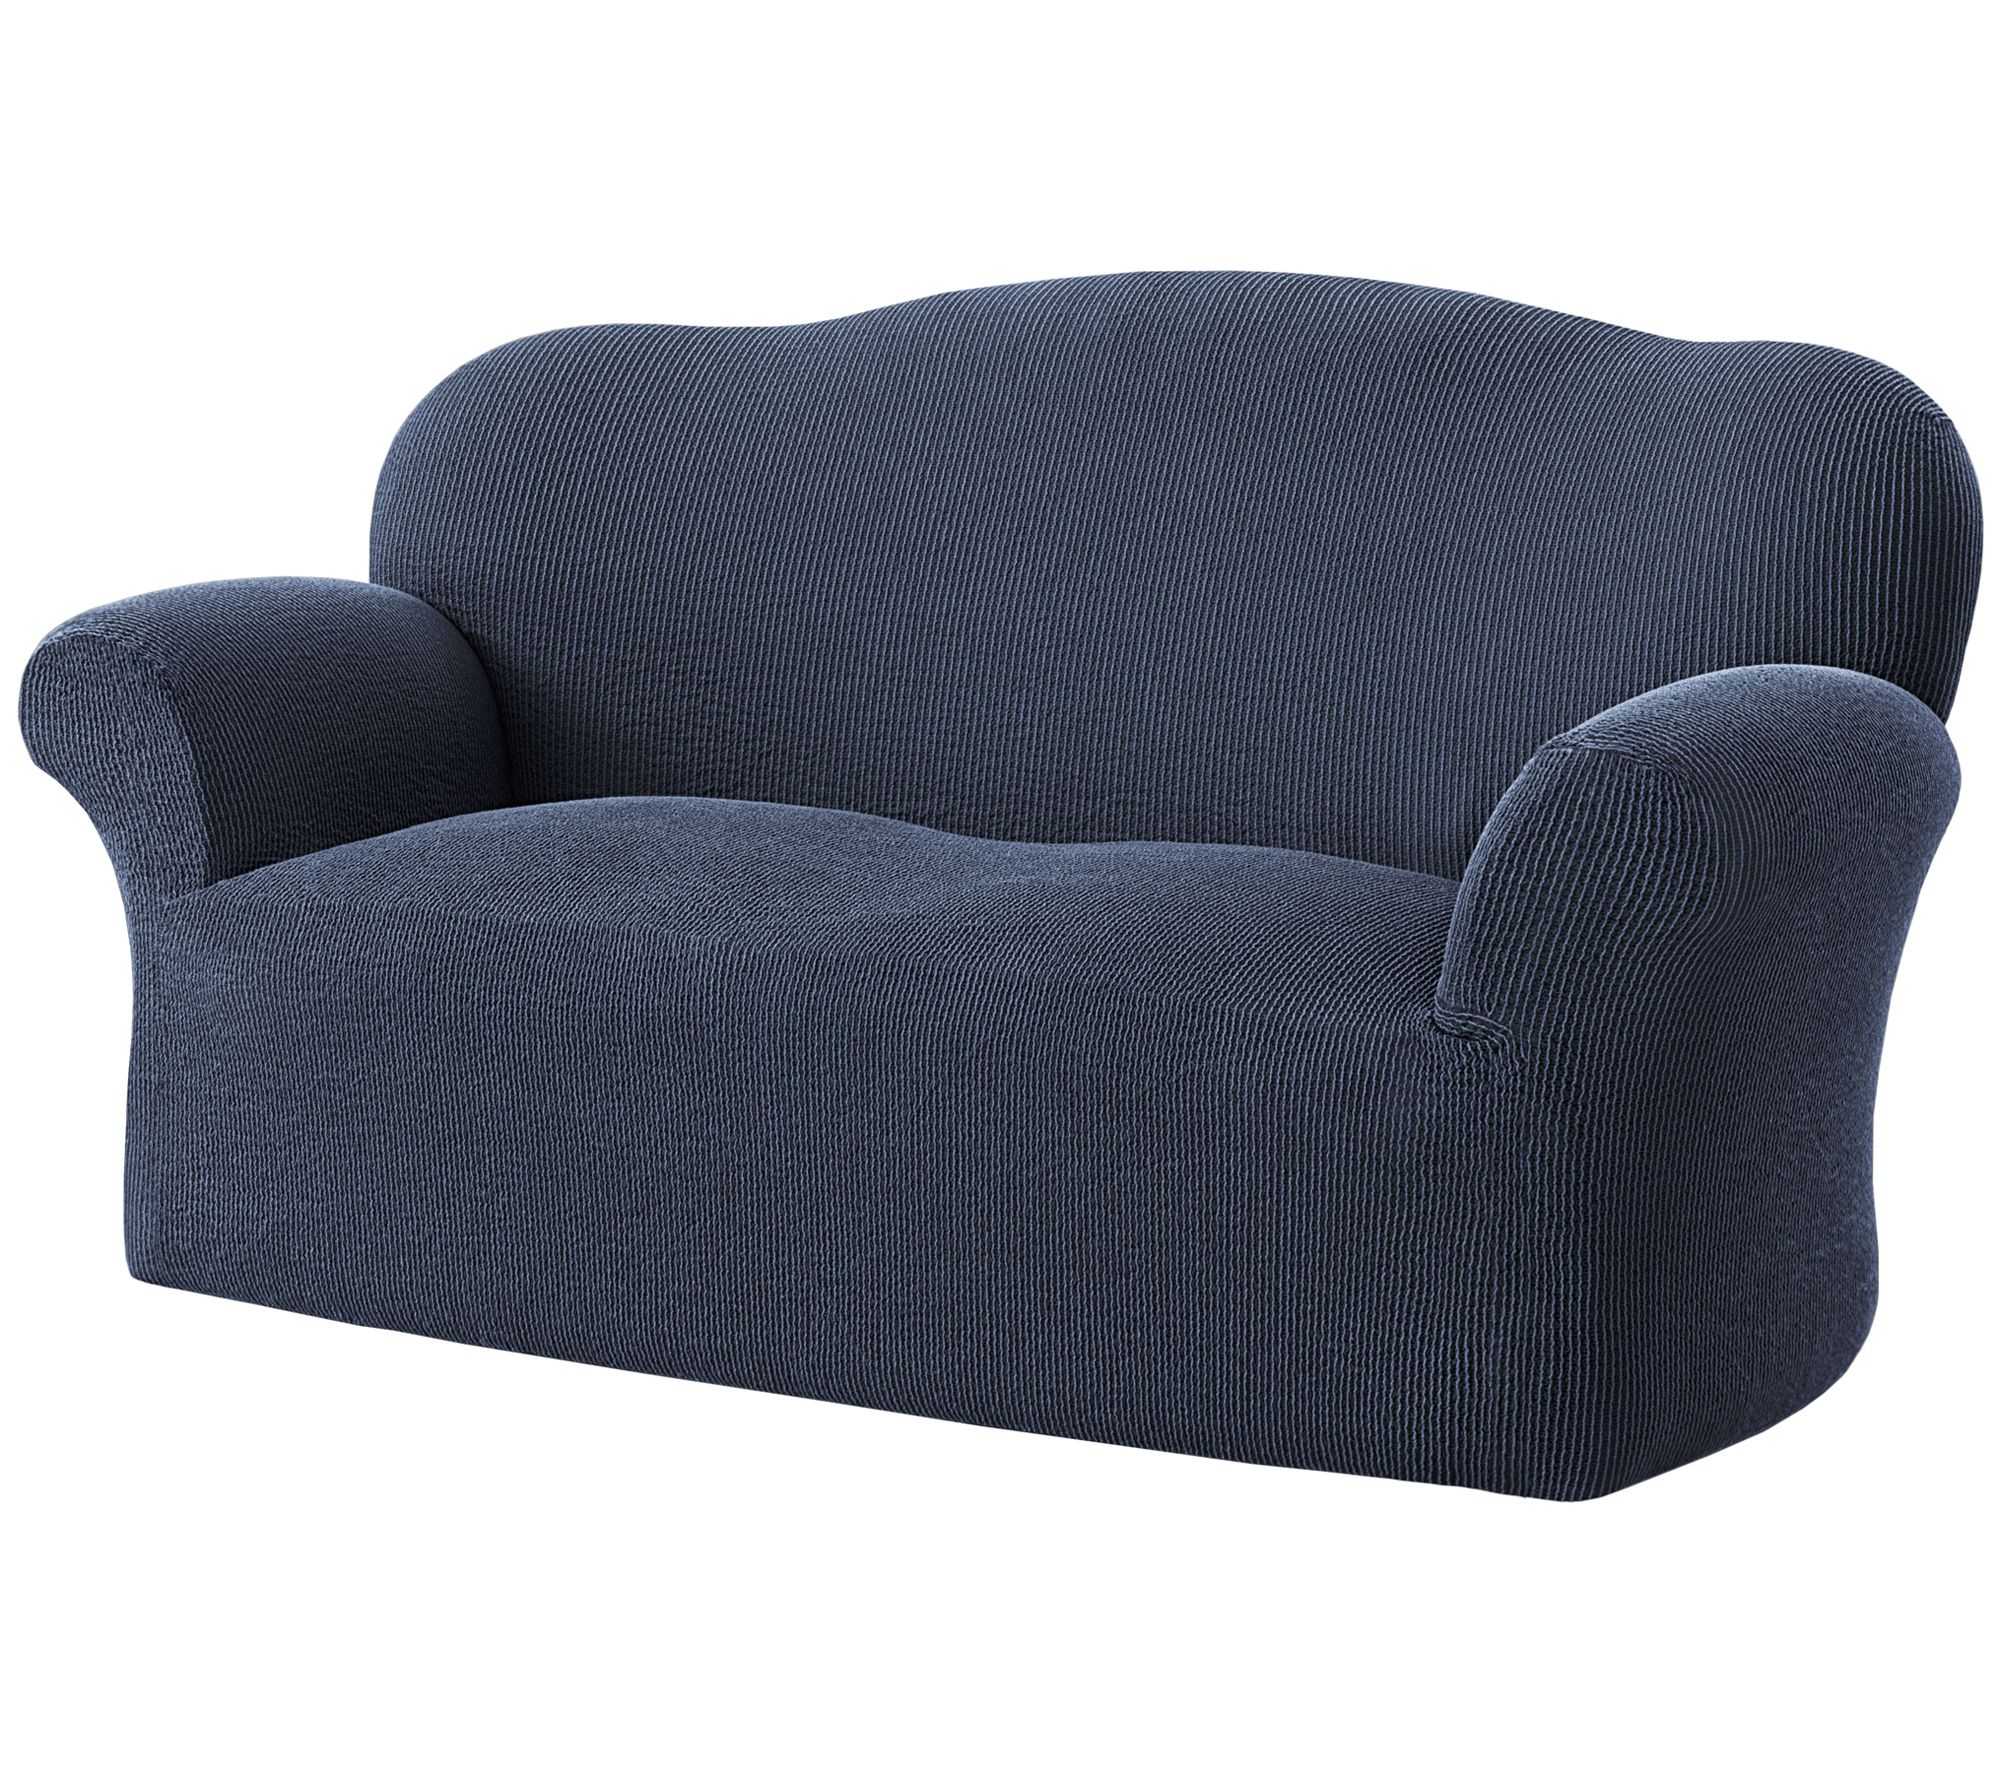 Paulato by 2-Seater Velluto Gaico Pattern Furniture Cover